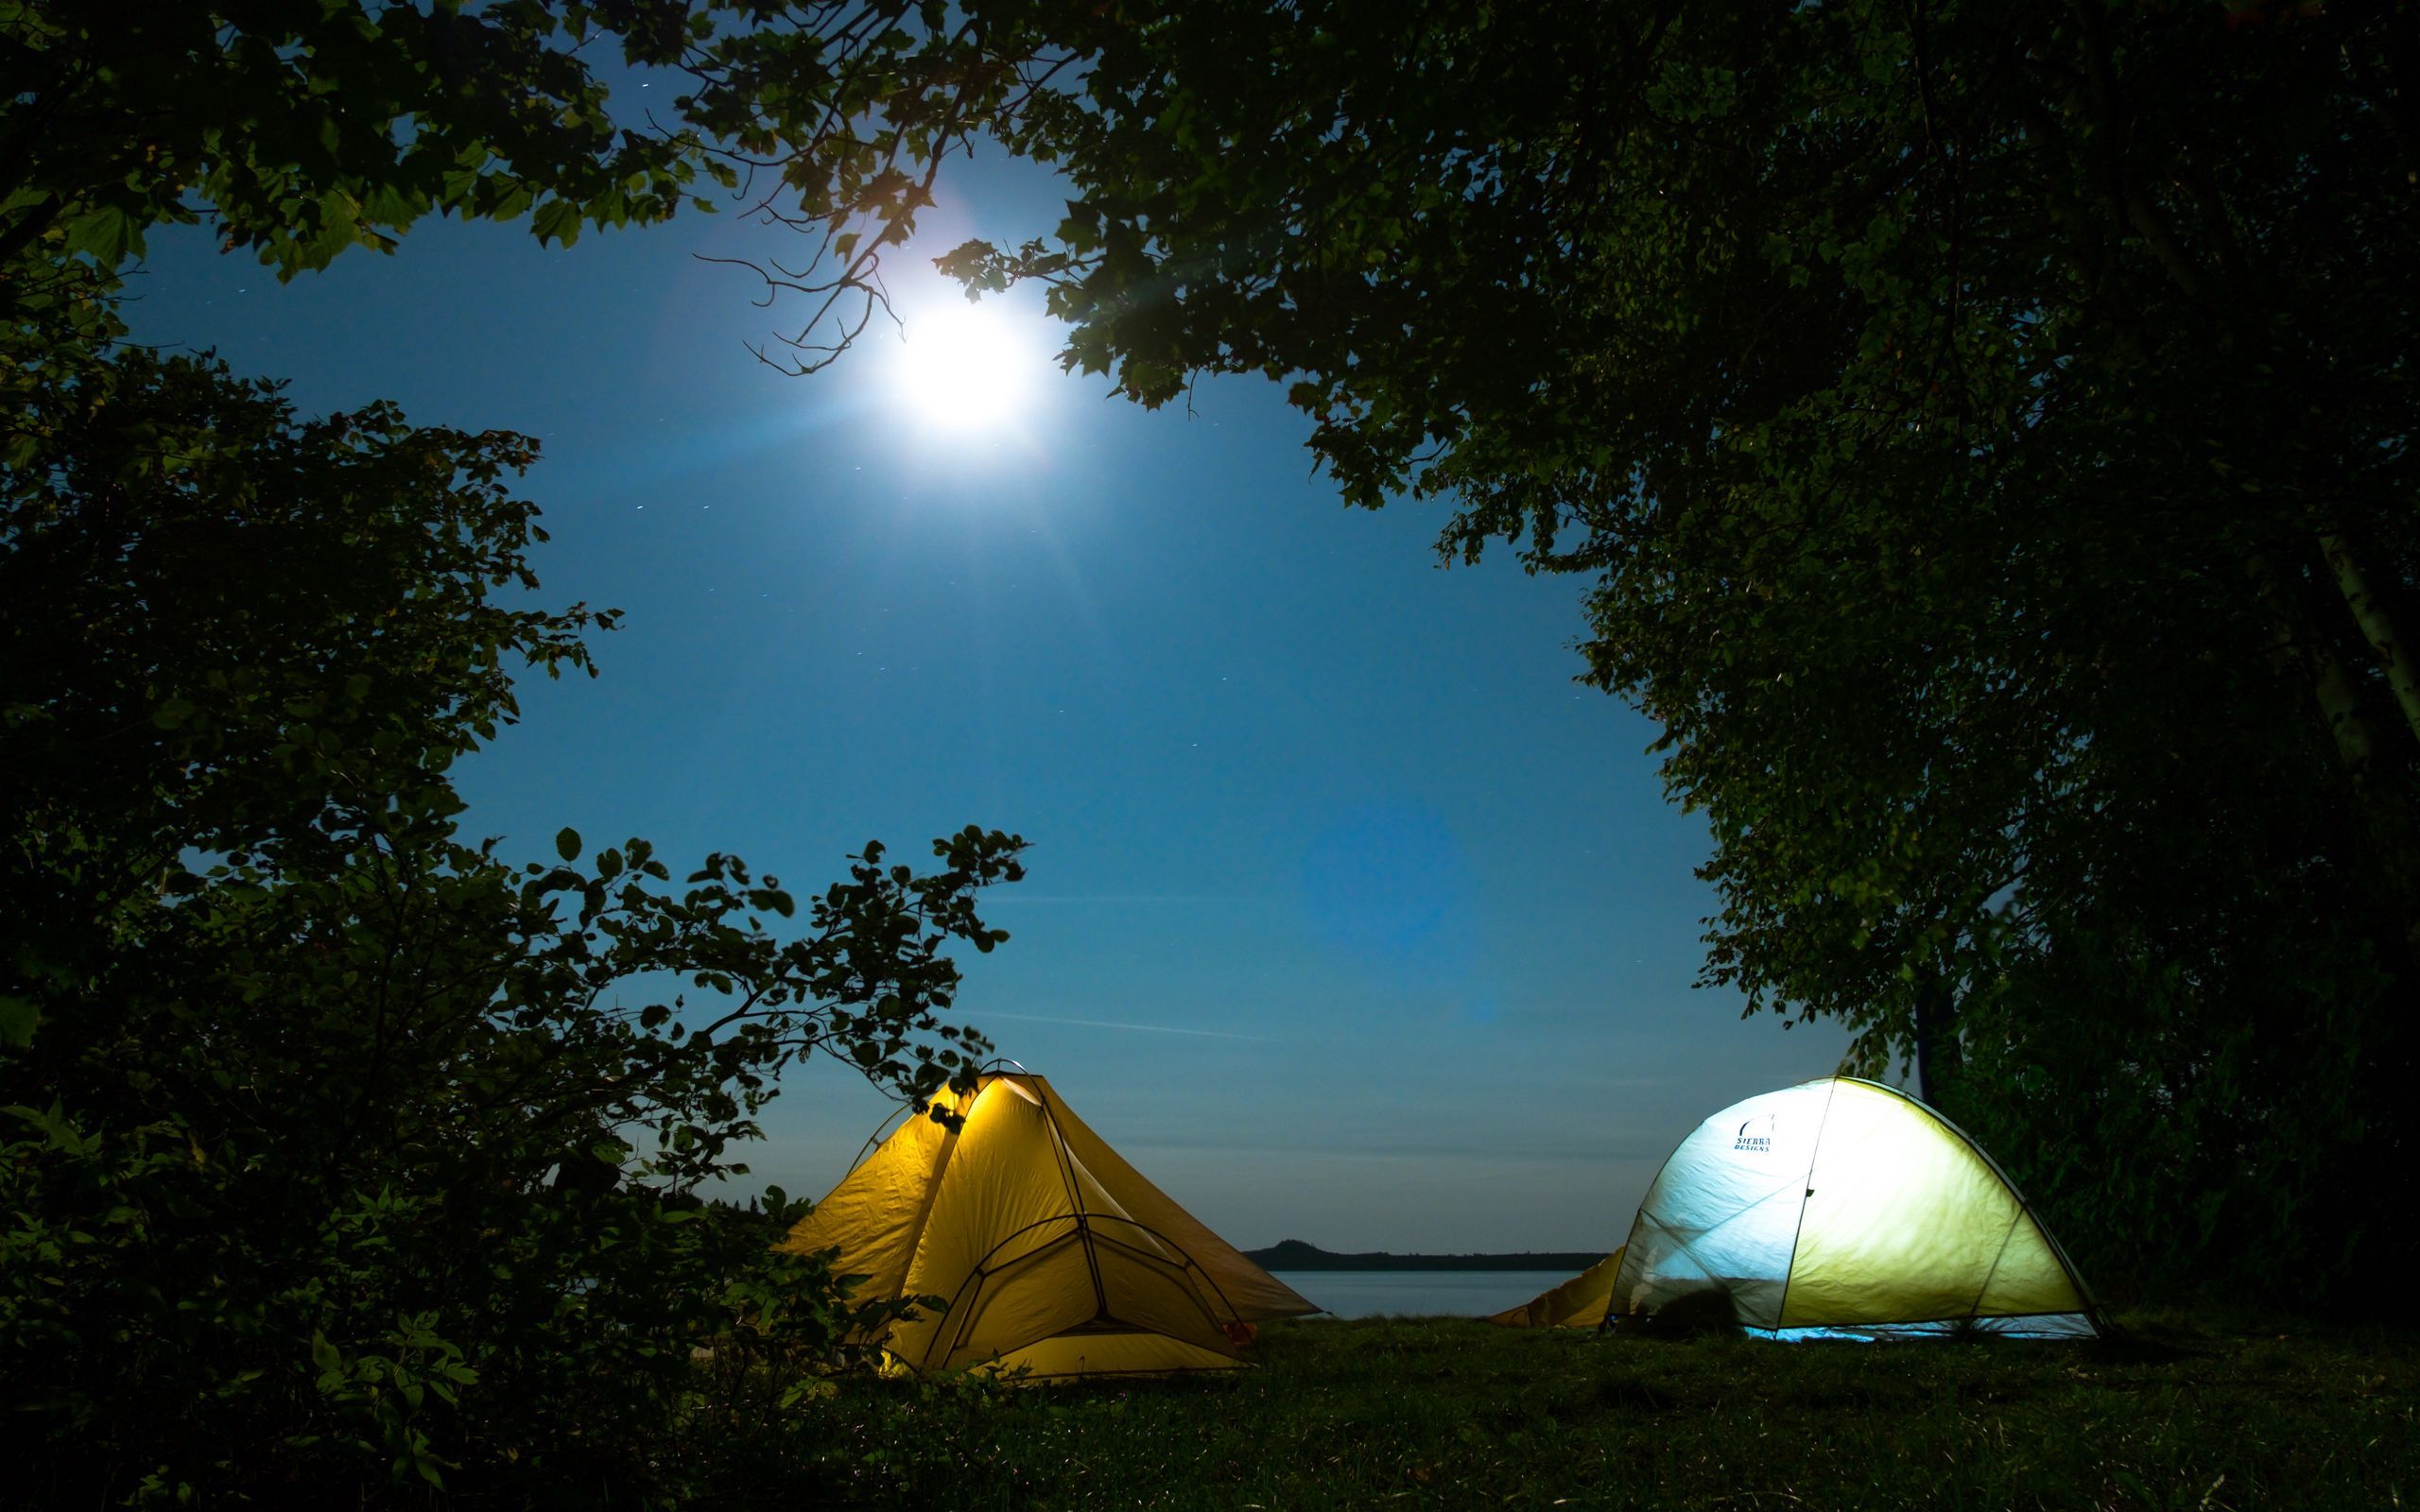 Download wallpaper 2560x1600 tents, camping, trees widescreen 16